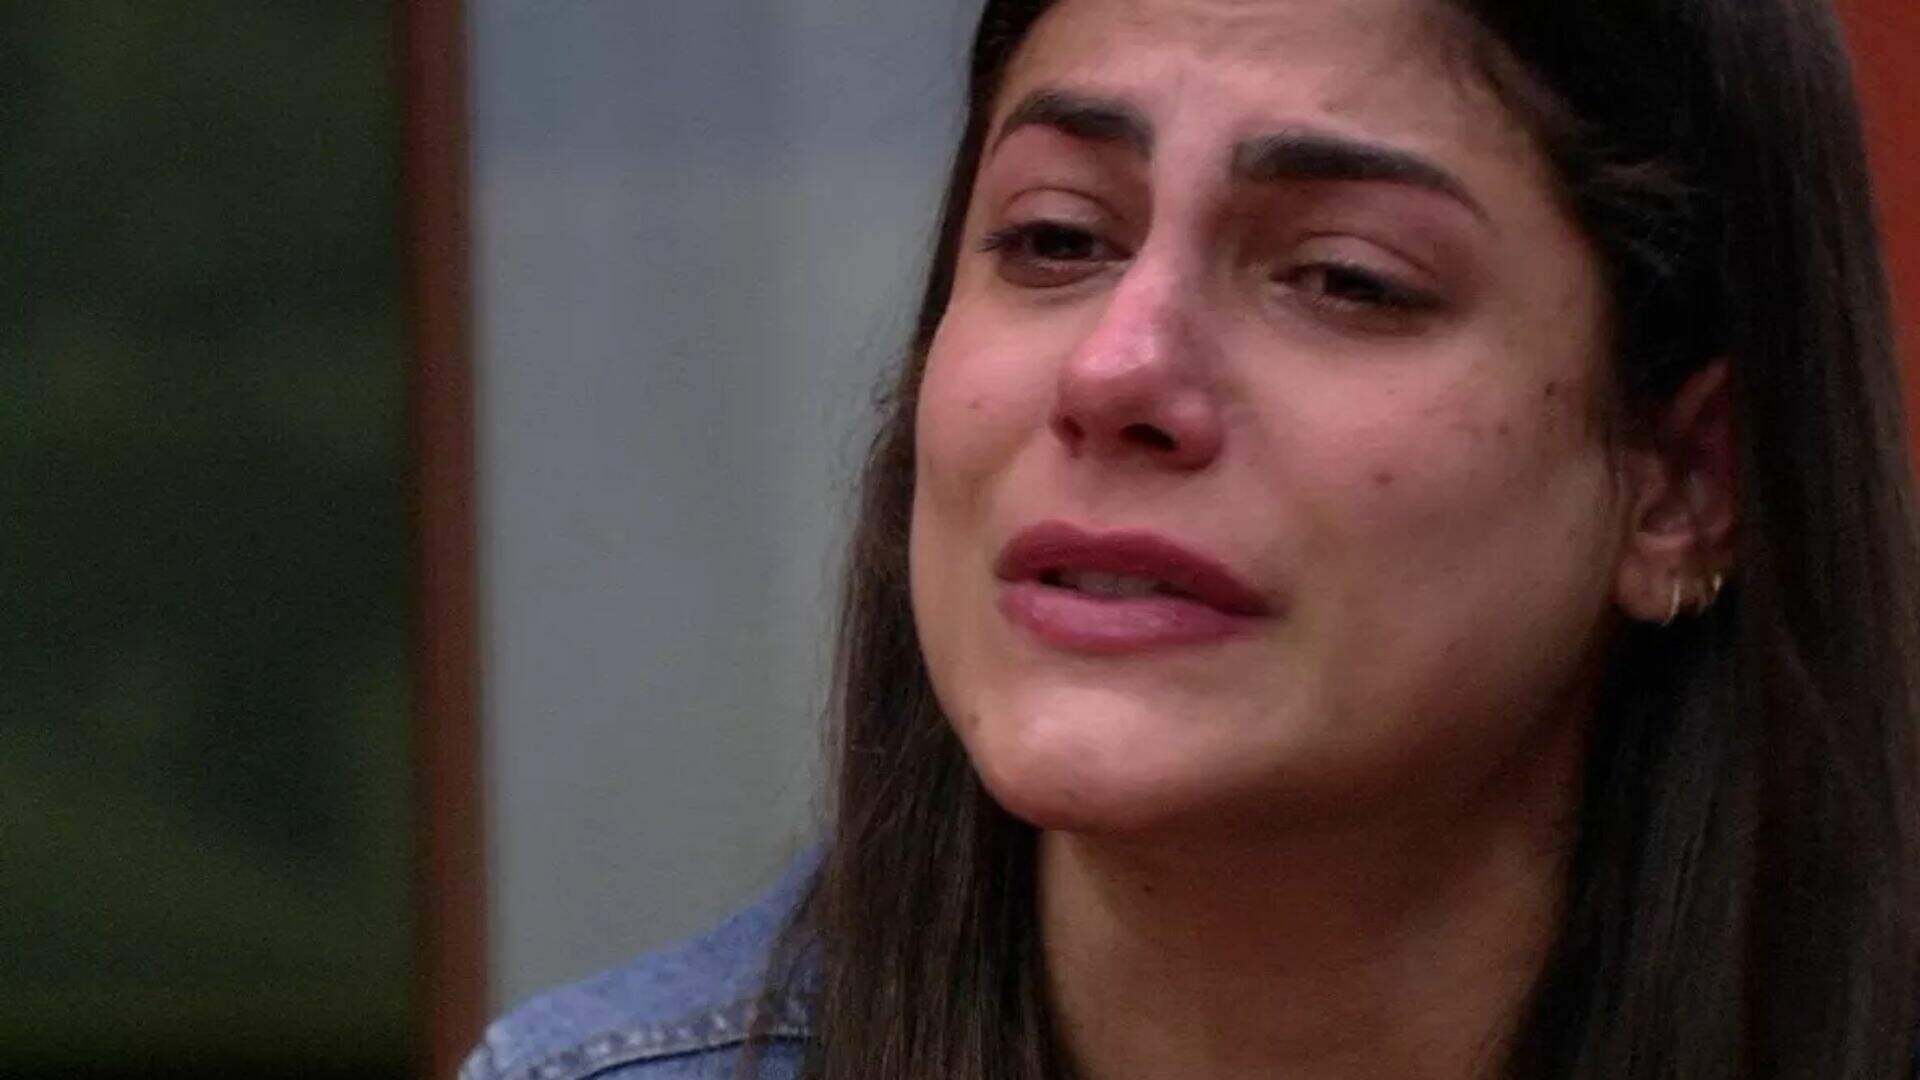 DESESPERO! Ex-BBB Mari Gonzalez fica presa em elevador e pede socorro - Metropolitana FM